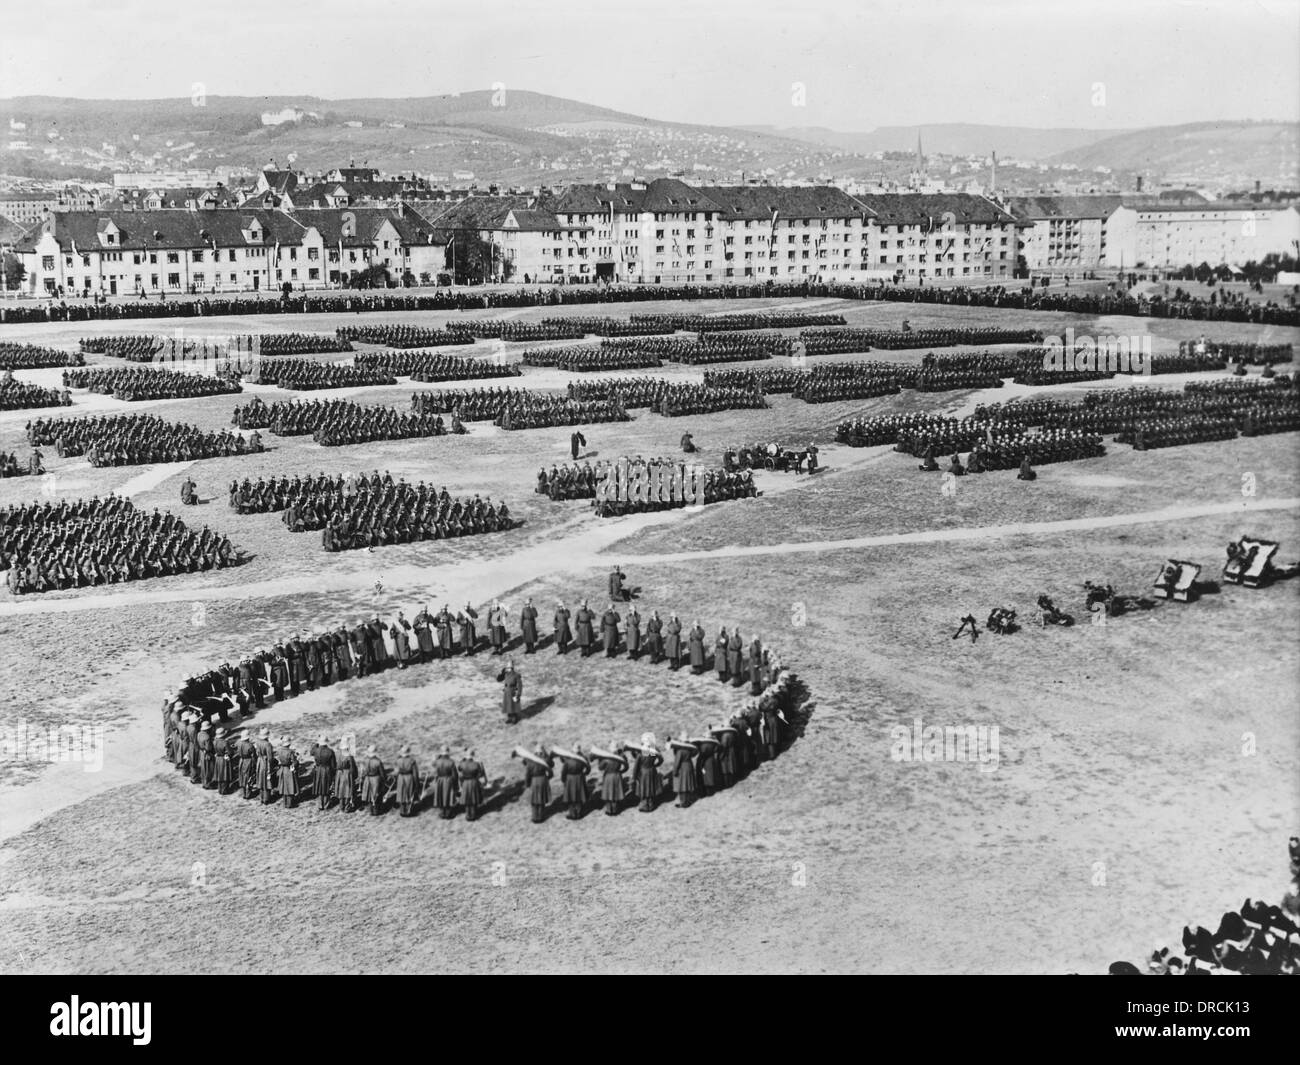 Esercito austriaco - Anschluss Foto Stock